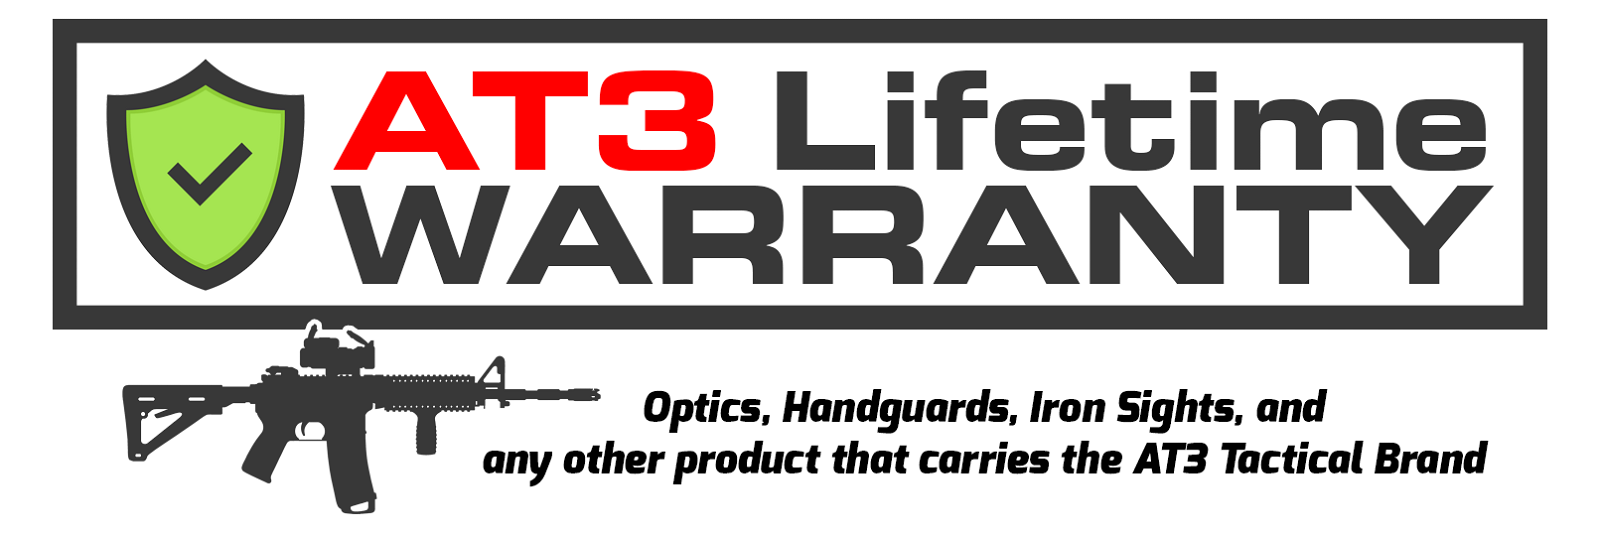 AT3 Lifetime Warranty Logo